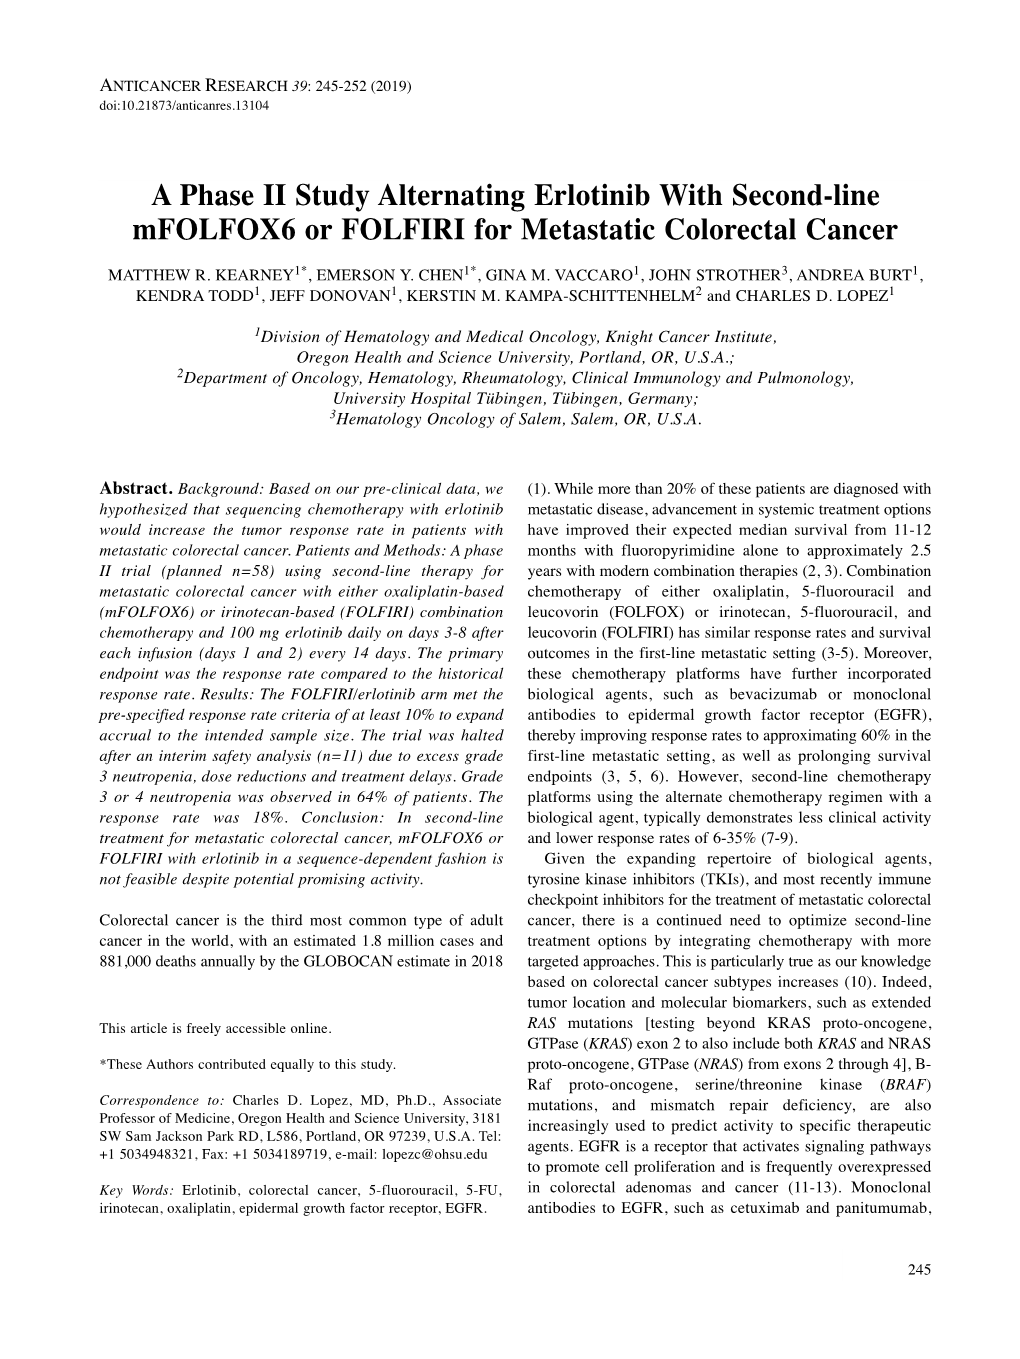 A Phase II Study Alternating Erlotinib with Second-Line Mfolfox6 Or FOLFIRI for Metastatic Colorectal Cancer MATTHEW R